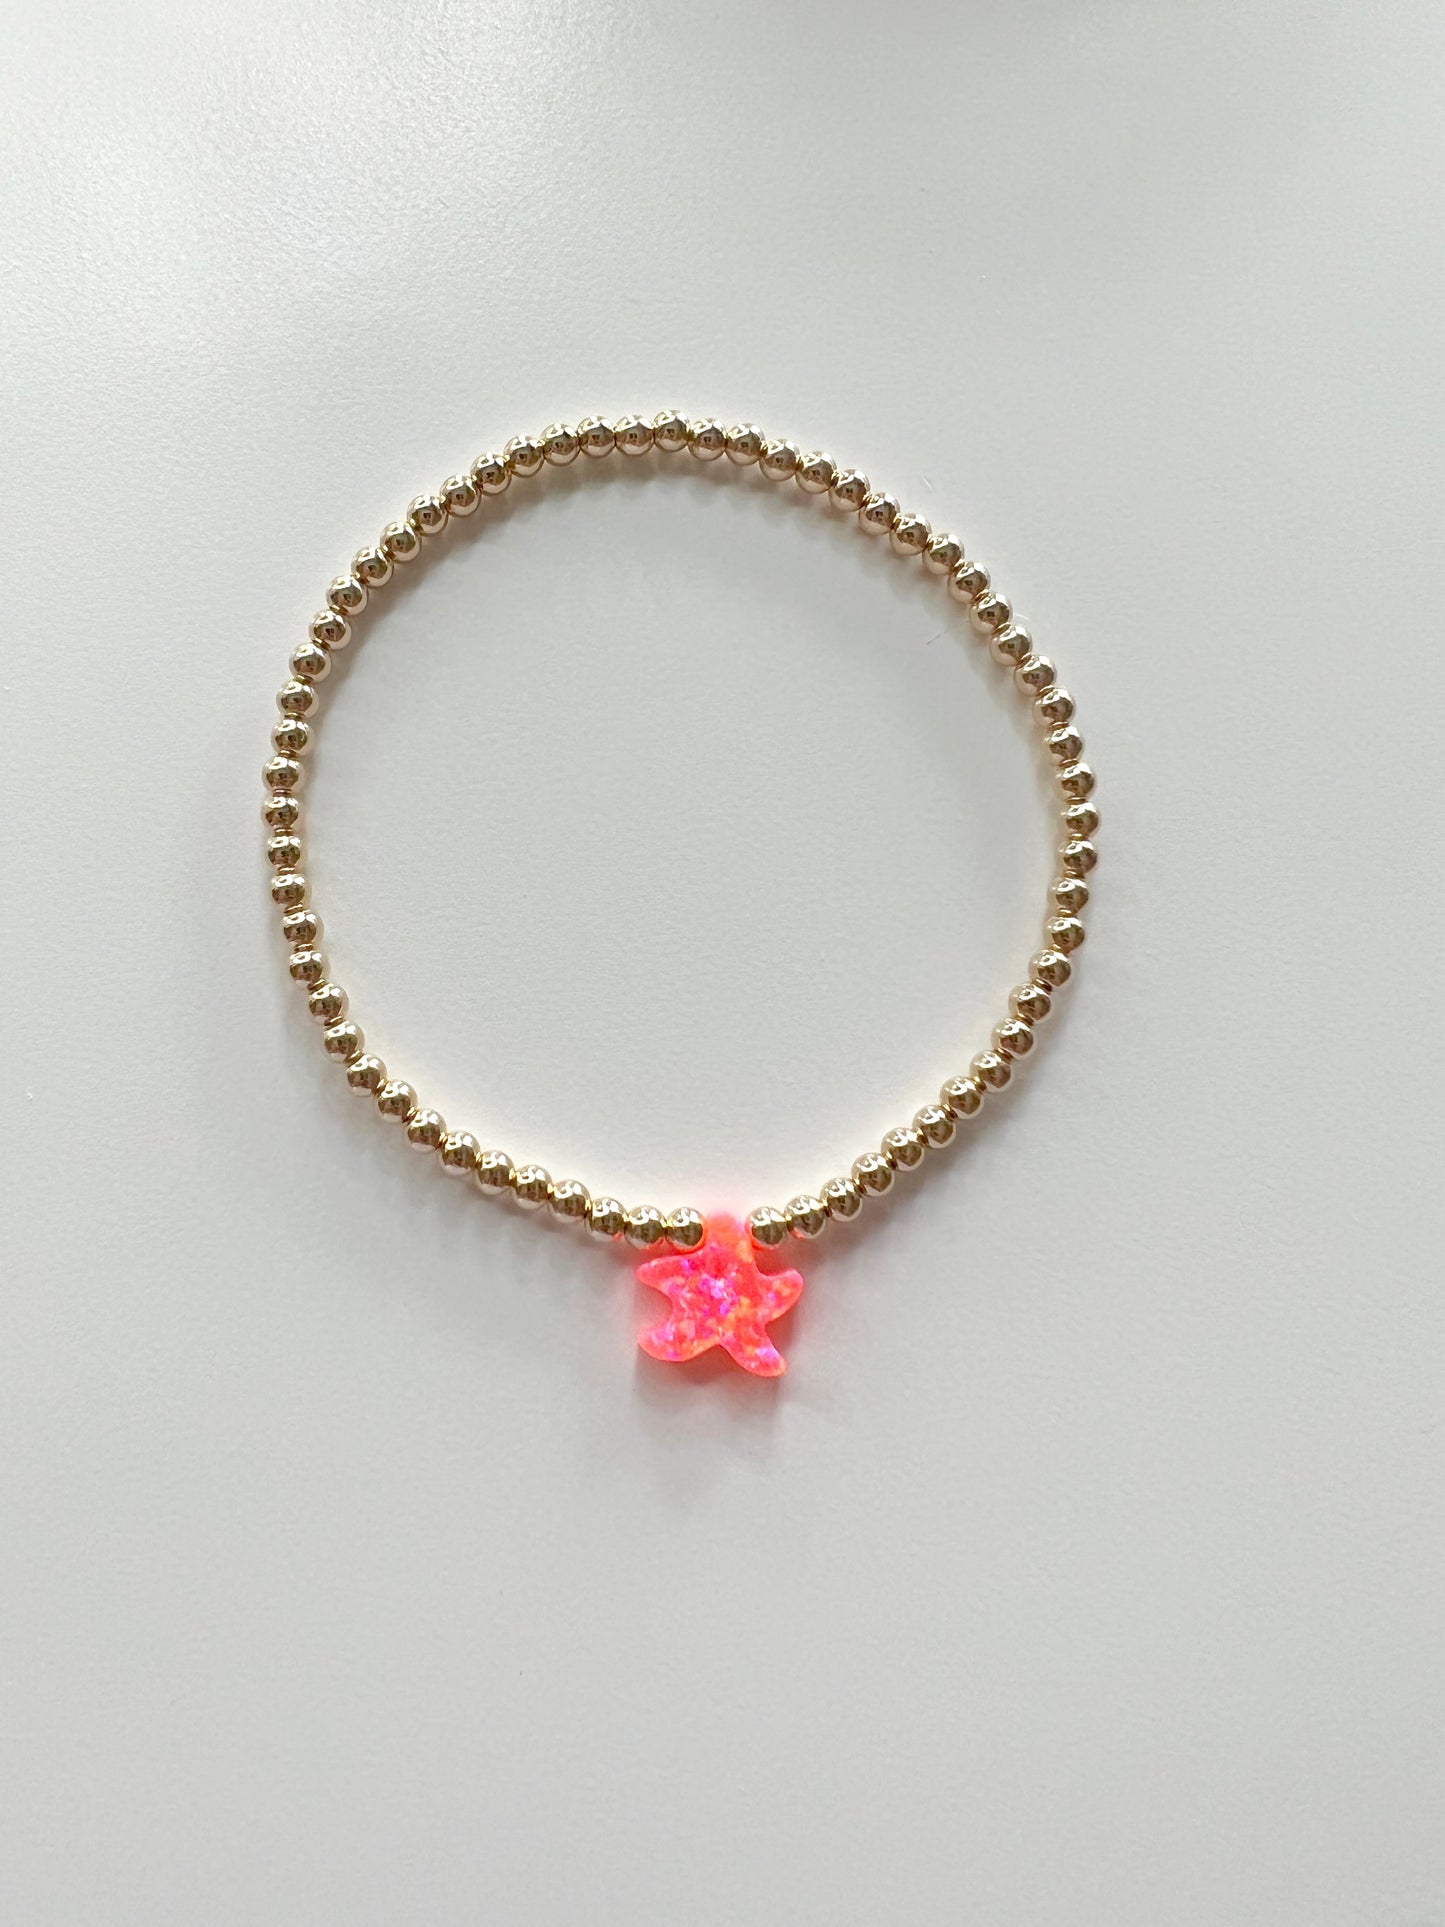 The Starfish Bracelet